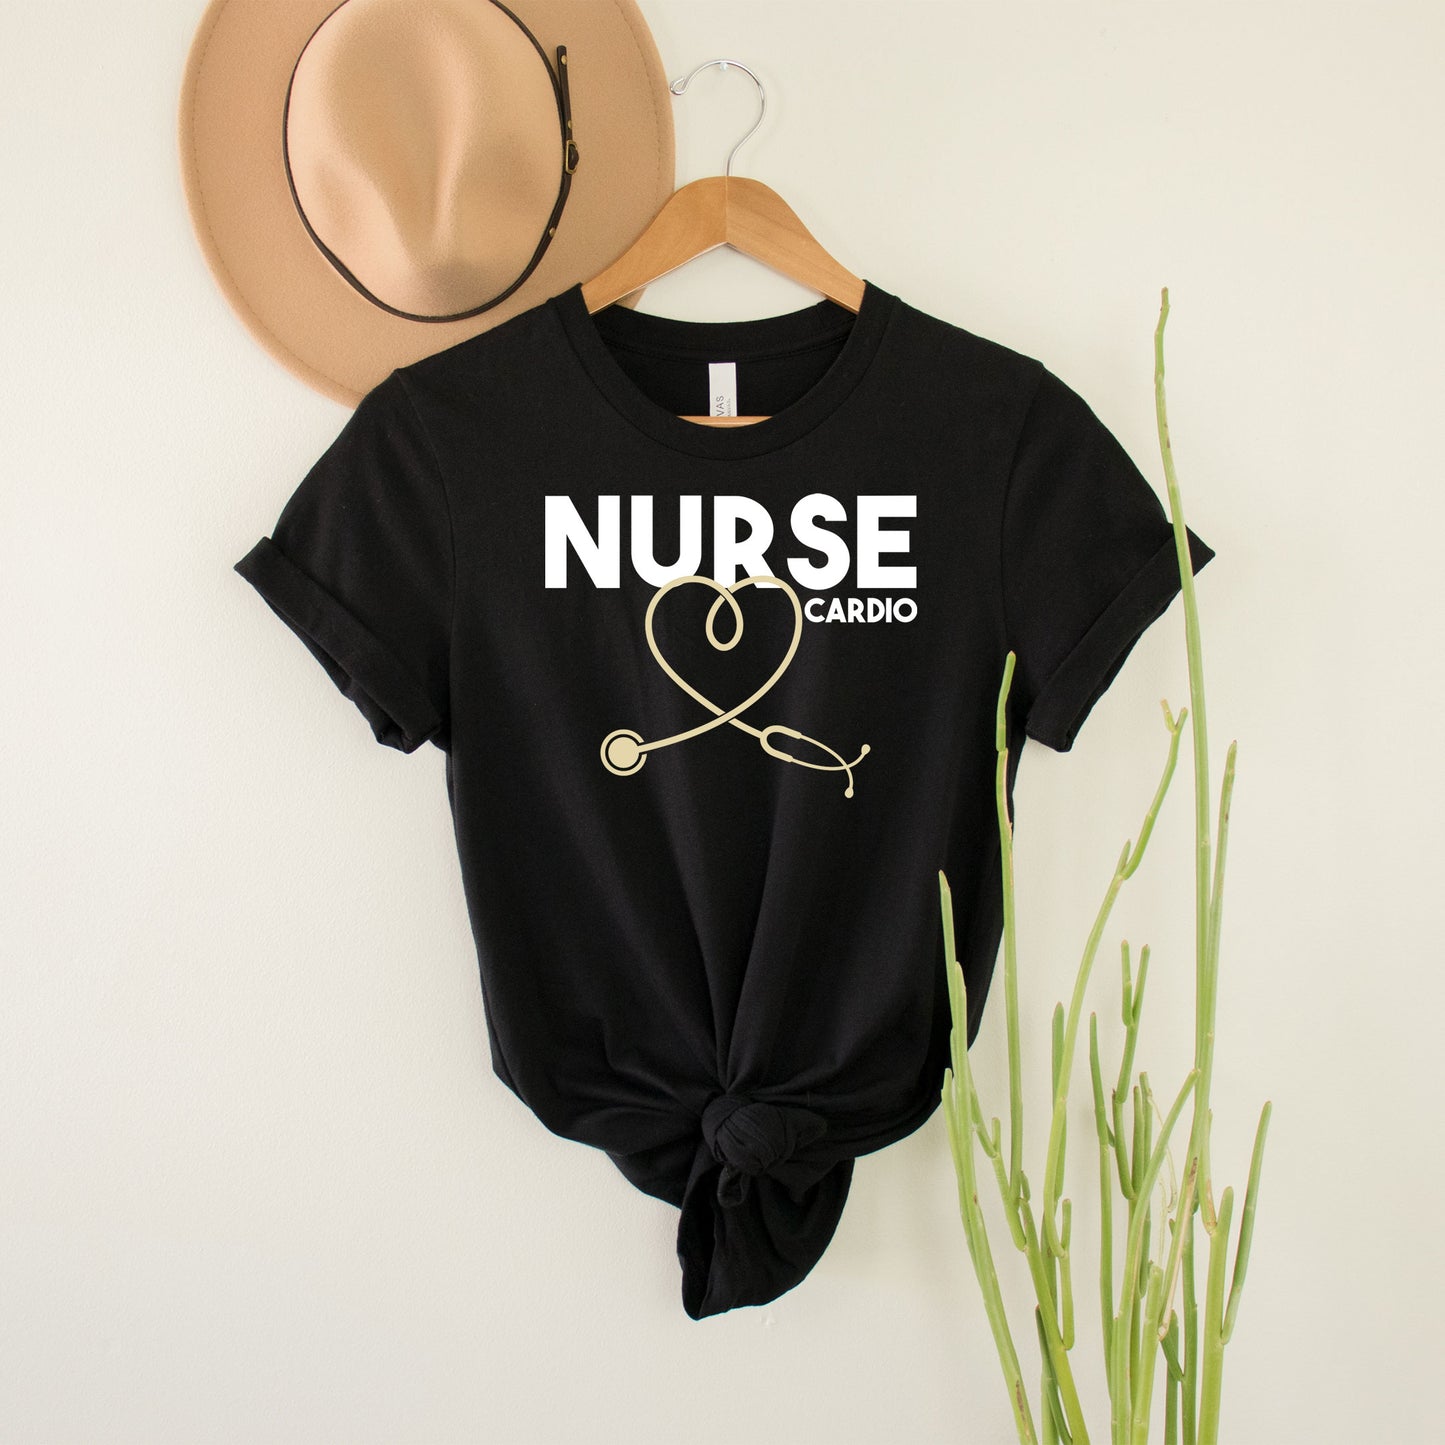 Cardio Nurse Future Cardiology Nursing Student Academic Nurse T-Shirt